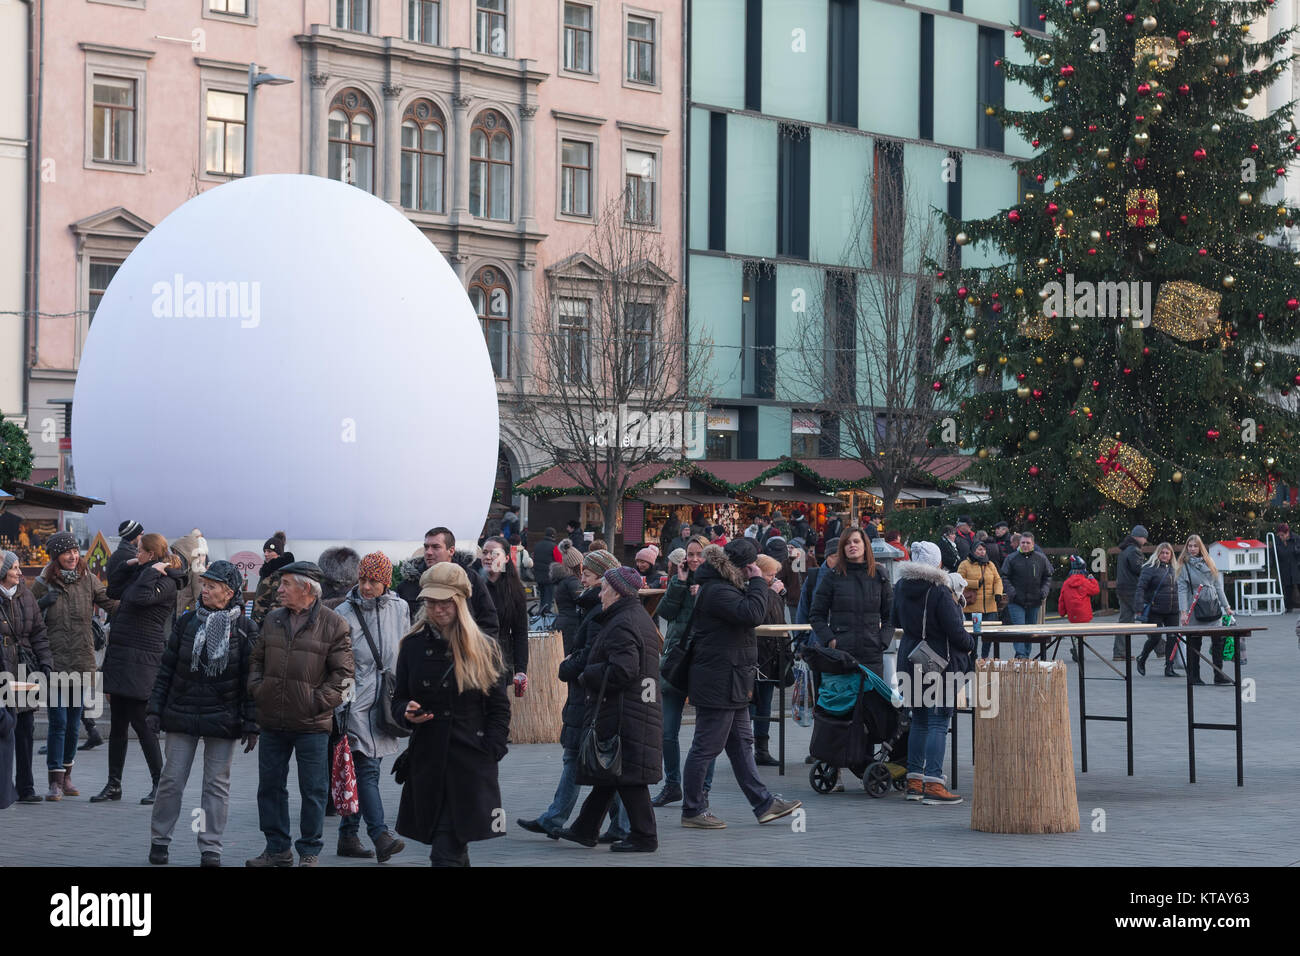 Brno,Czech Republic-December 18,2017: People browsing market stalls at Christmas market on Liberty Square on December 18, 2017 Brno, Czech Republic Stock Photo